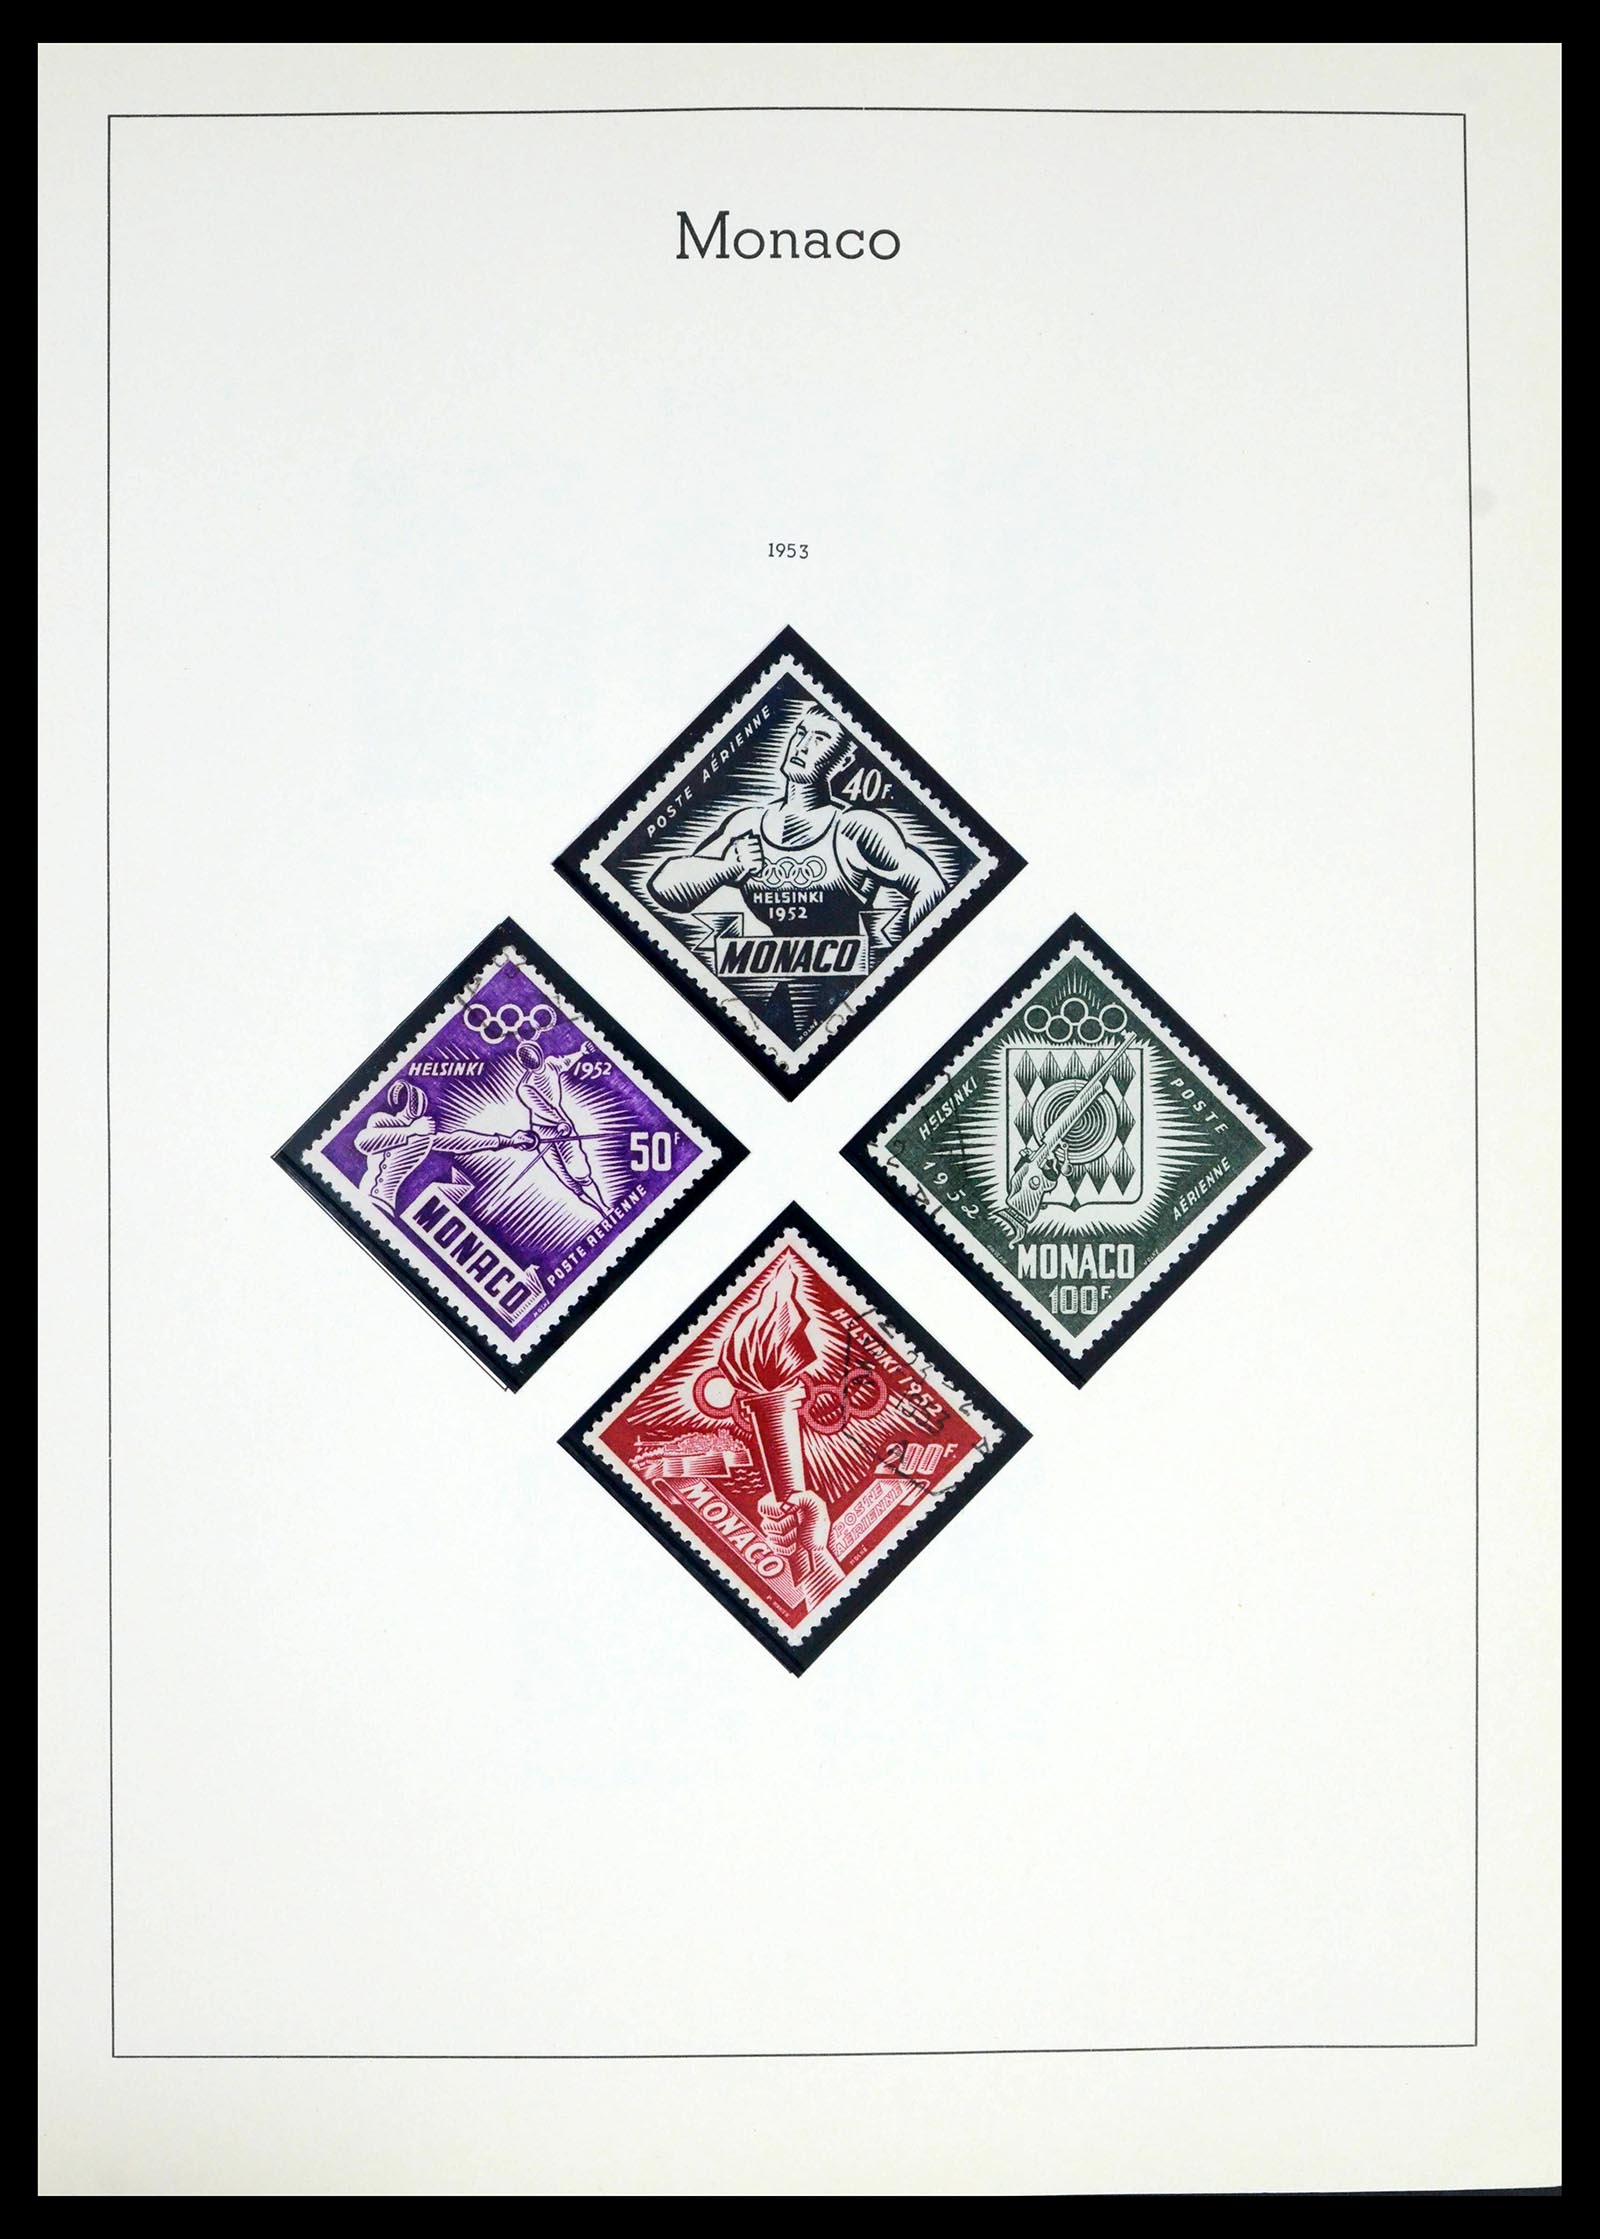 39392 0045 - Stamp collection 39392 Monaco 1885-1999.